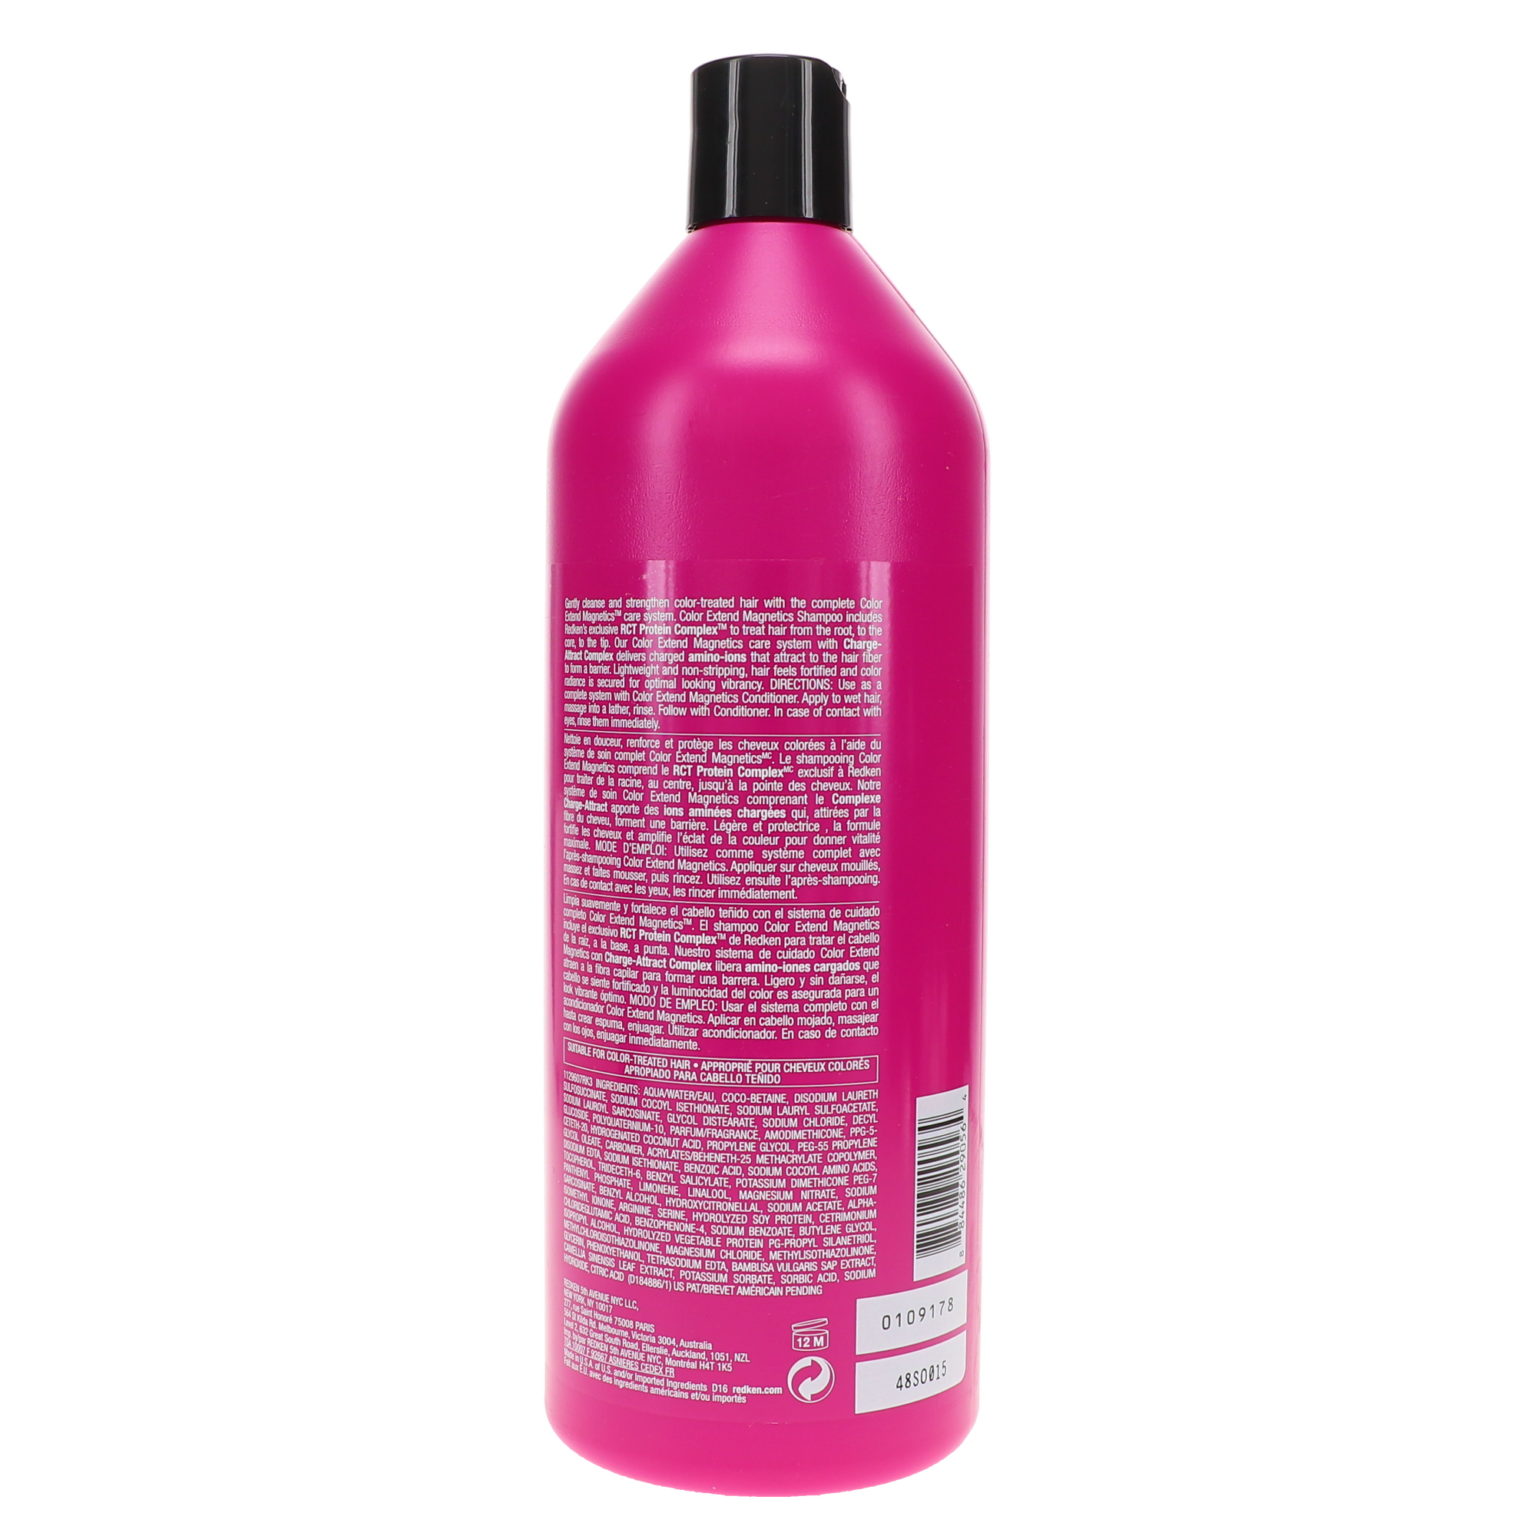 Redken Color Extend Shampoo 33.8 fl Oz